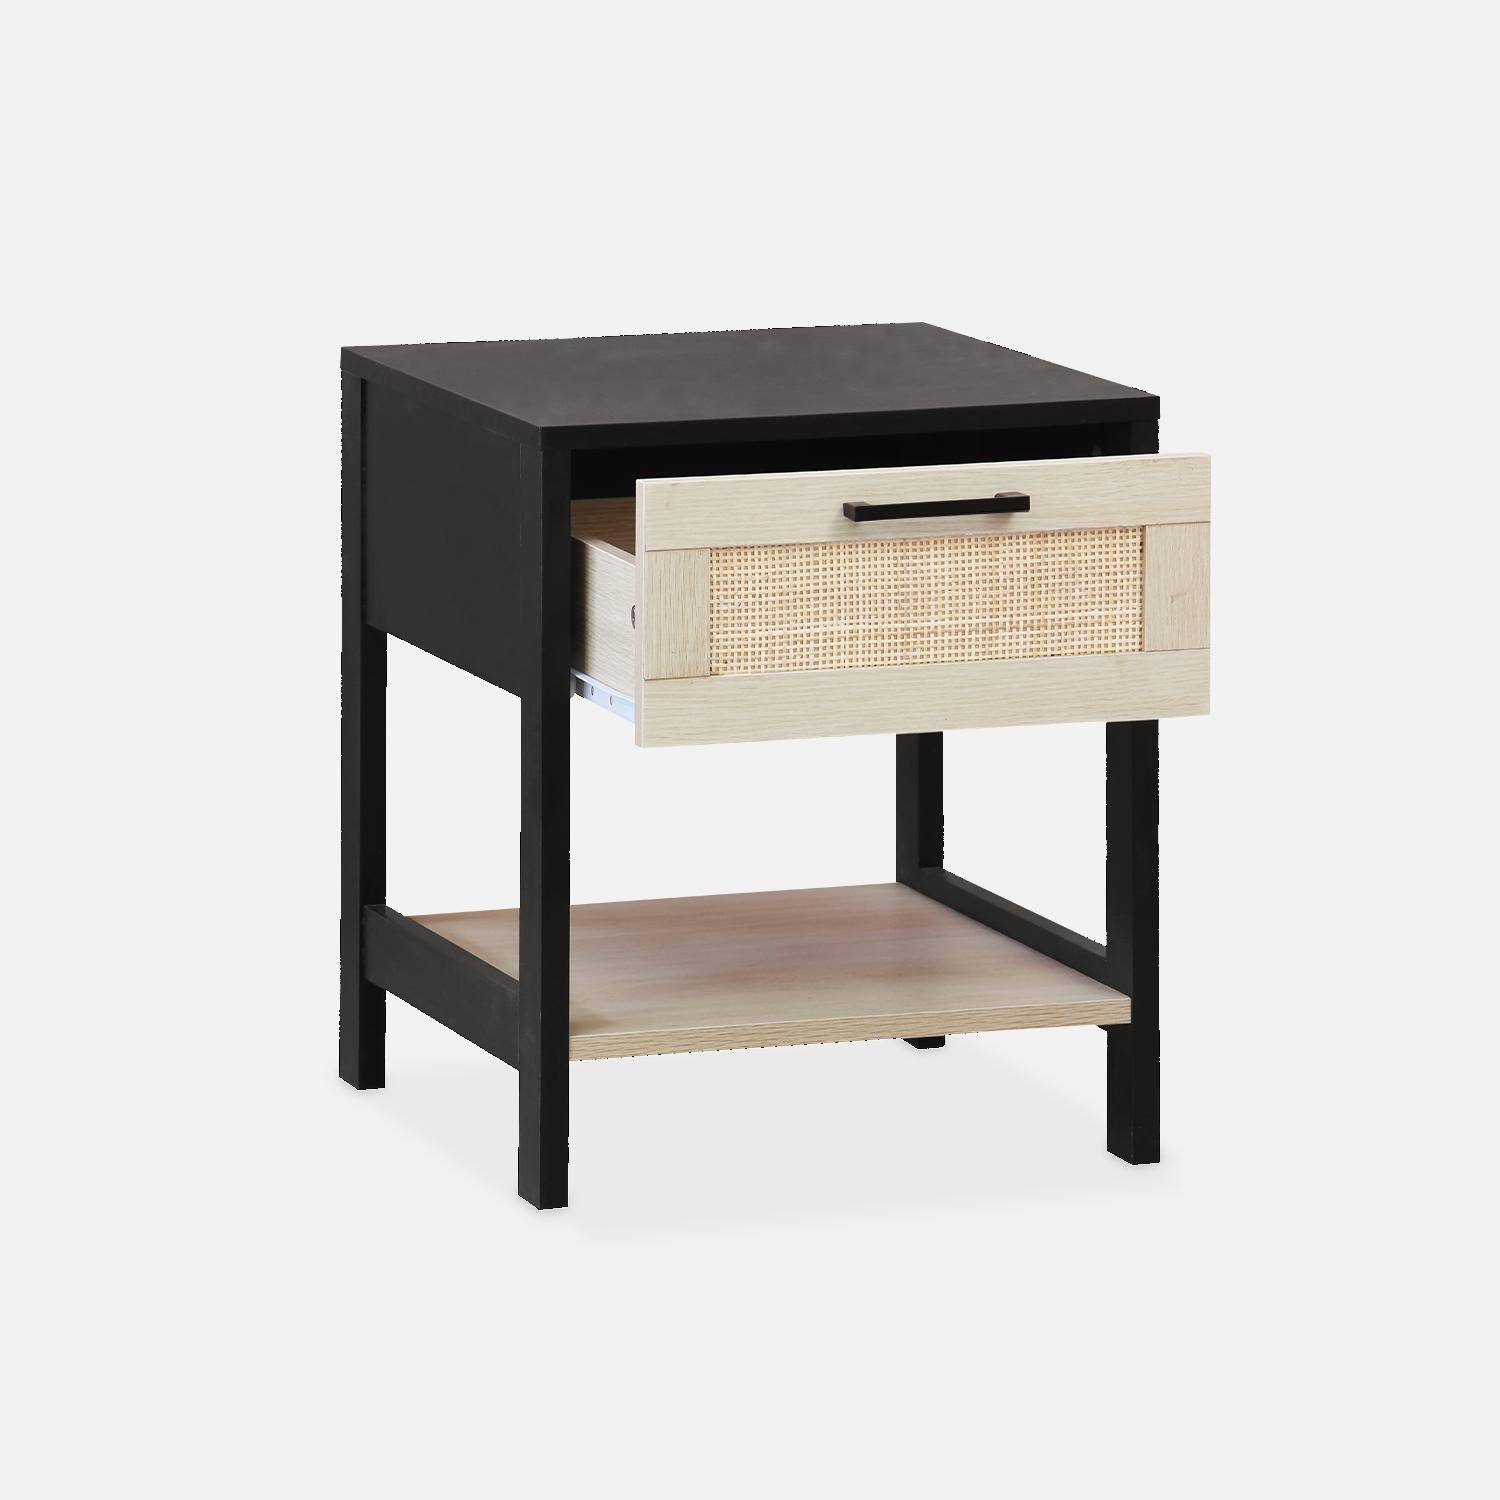 Black and cane bedside table 40 x 40 x 48cm - Bianca - 1 drawer, 1 shelf Photo4